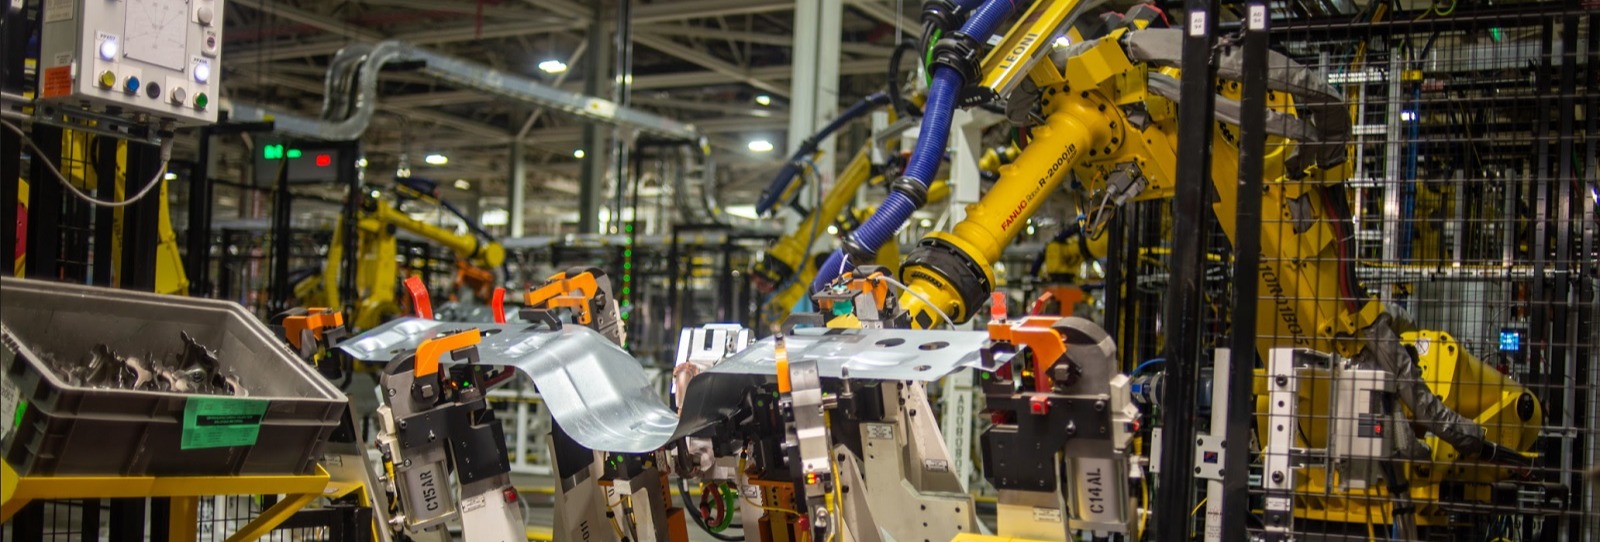 Robotic Arm - Advanced Manufacturing